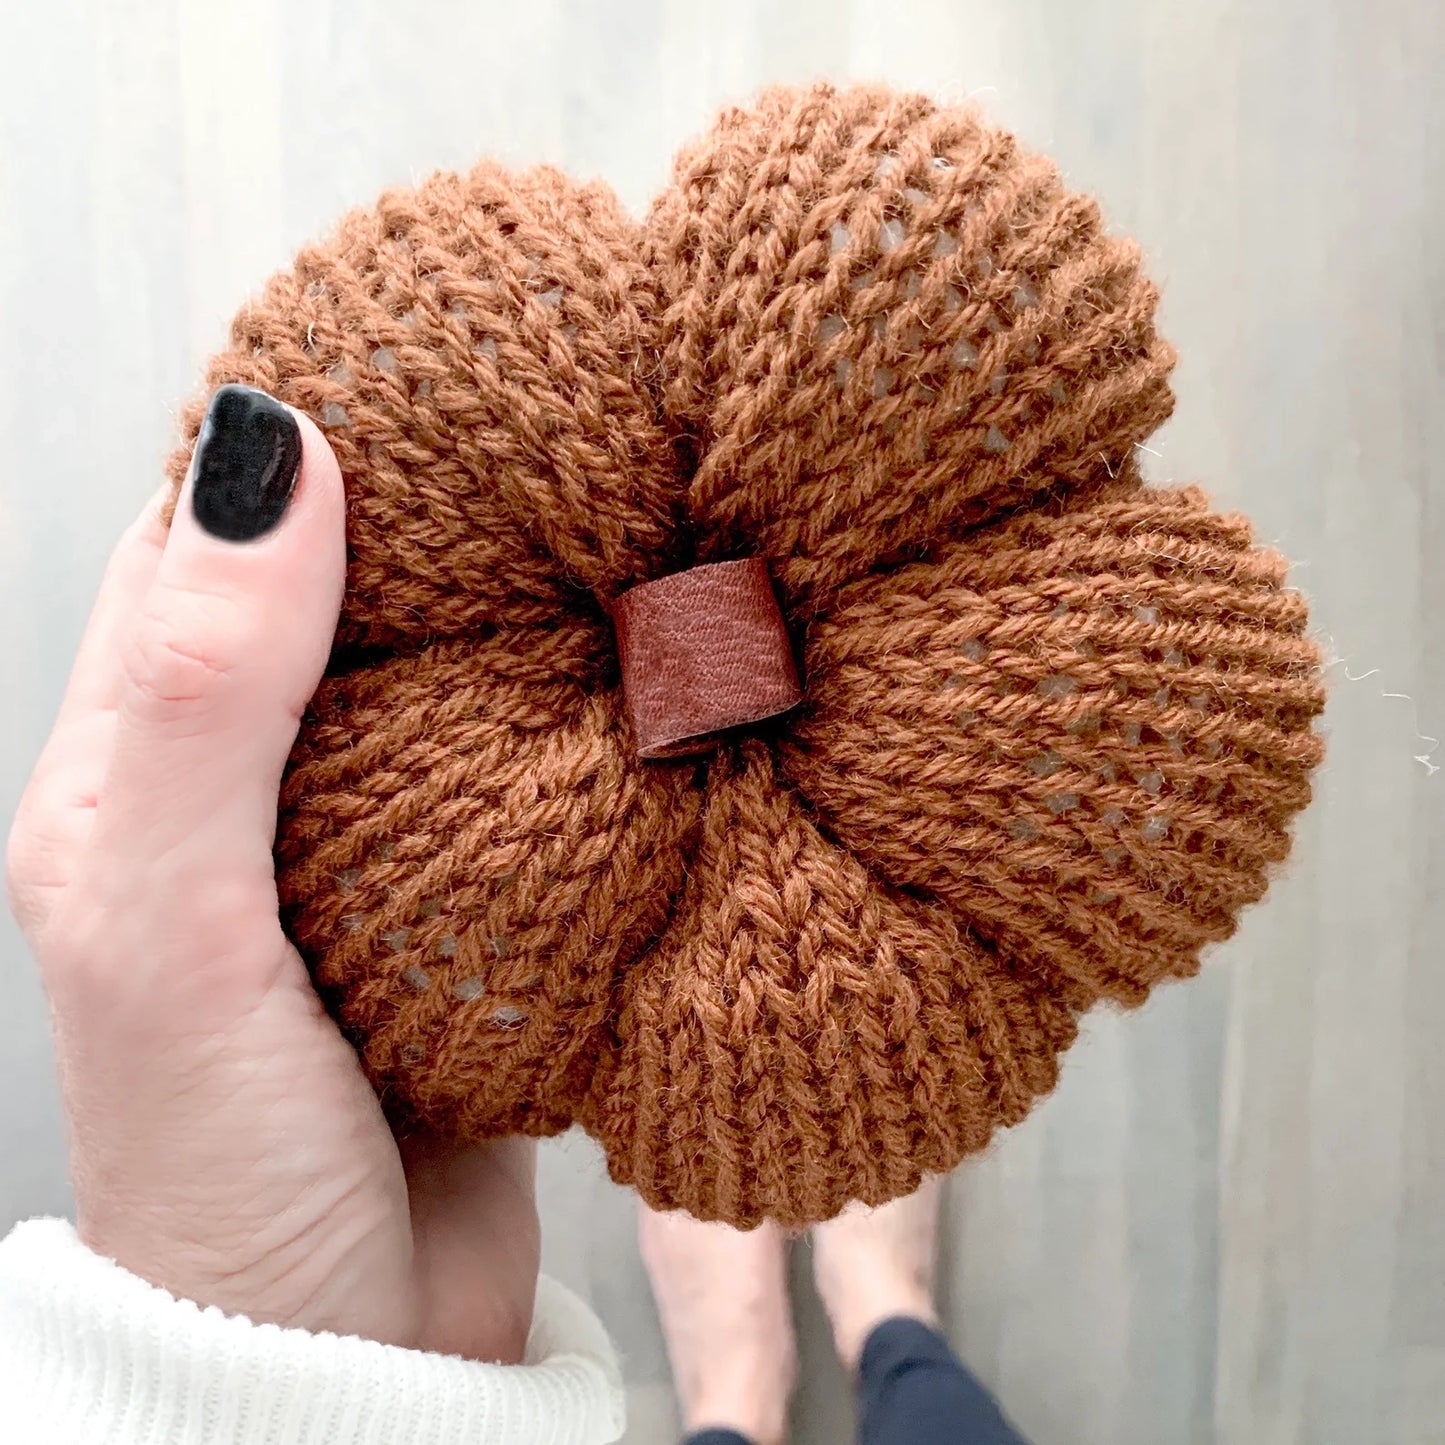 Knit Autumn Pumpkin with Leather Stem